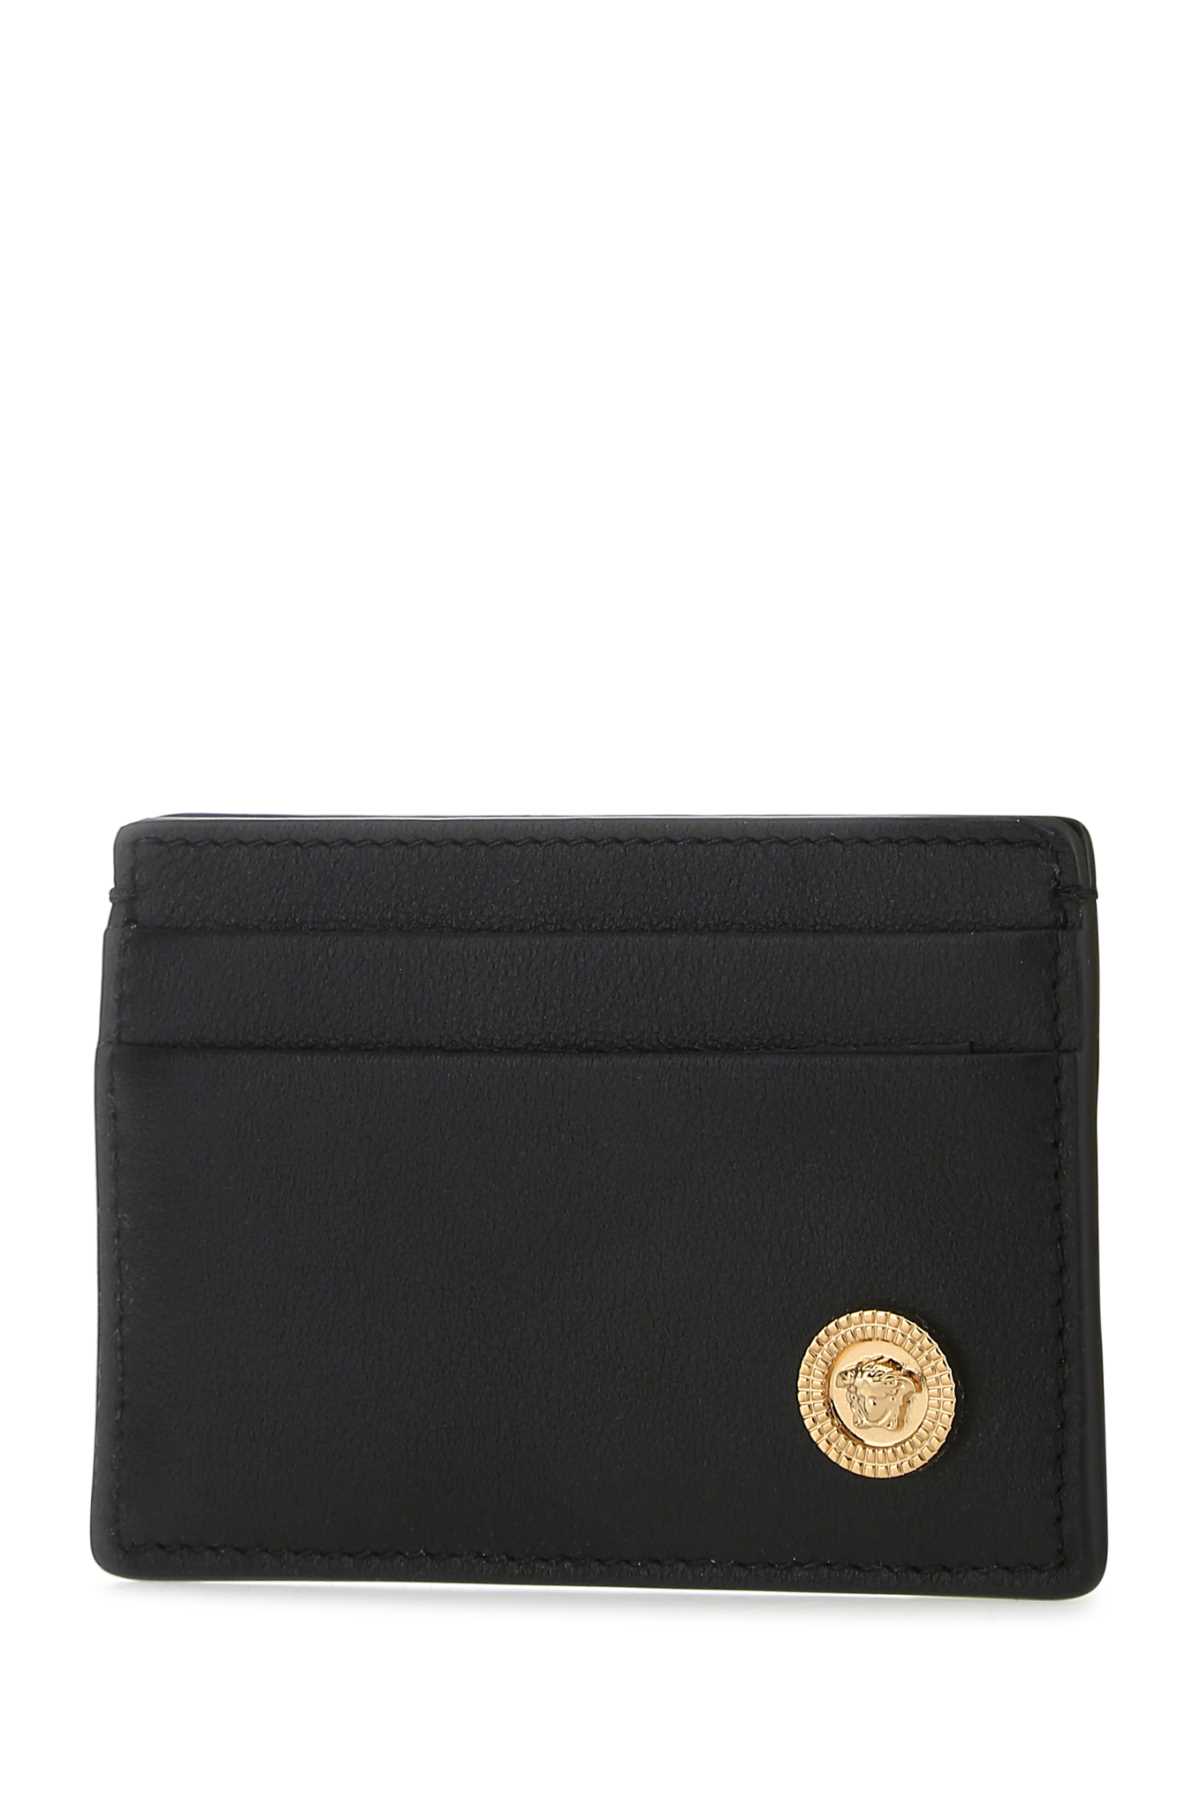 Versace Black Leather Card Holder In 1b00v